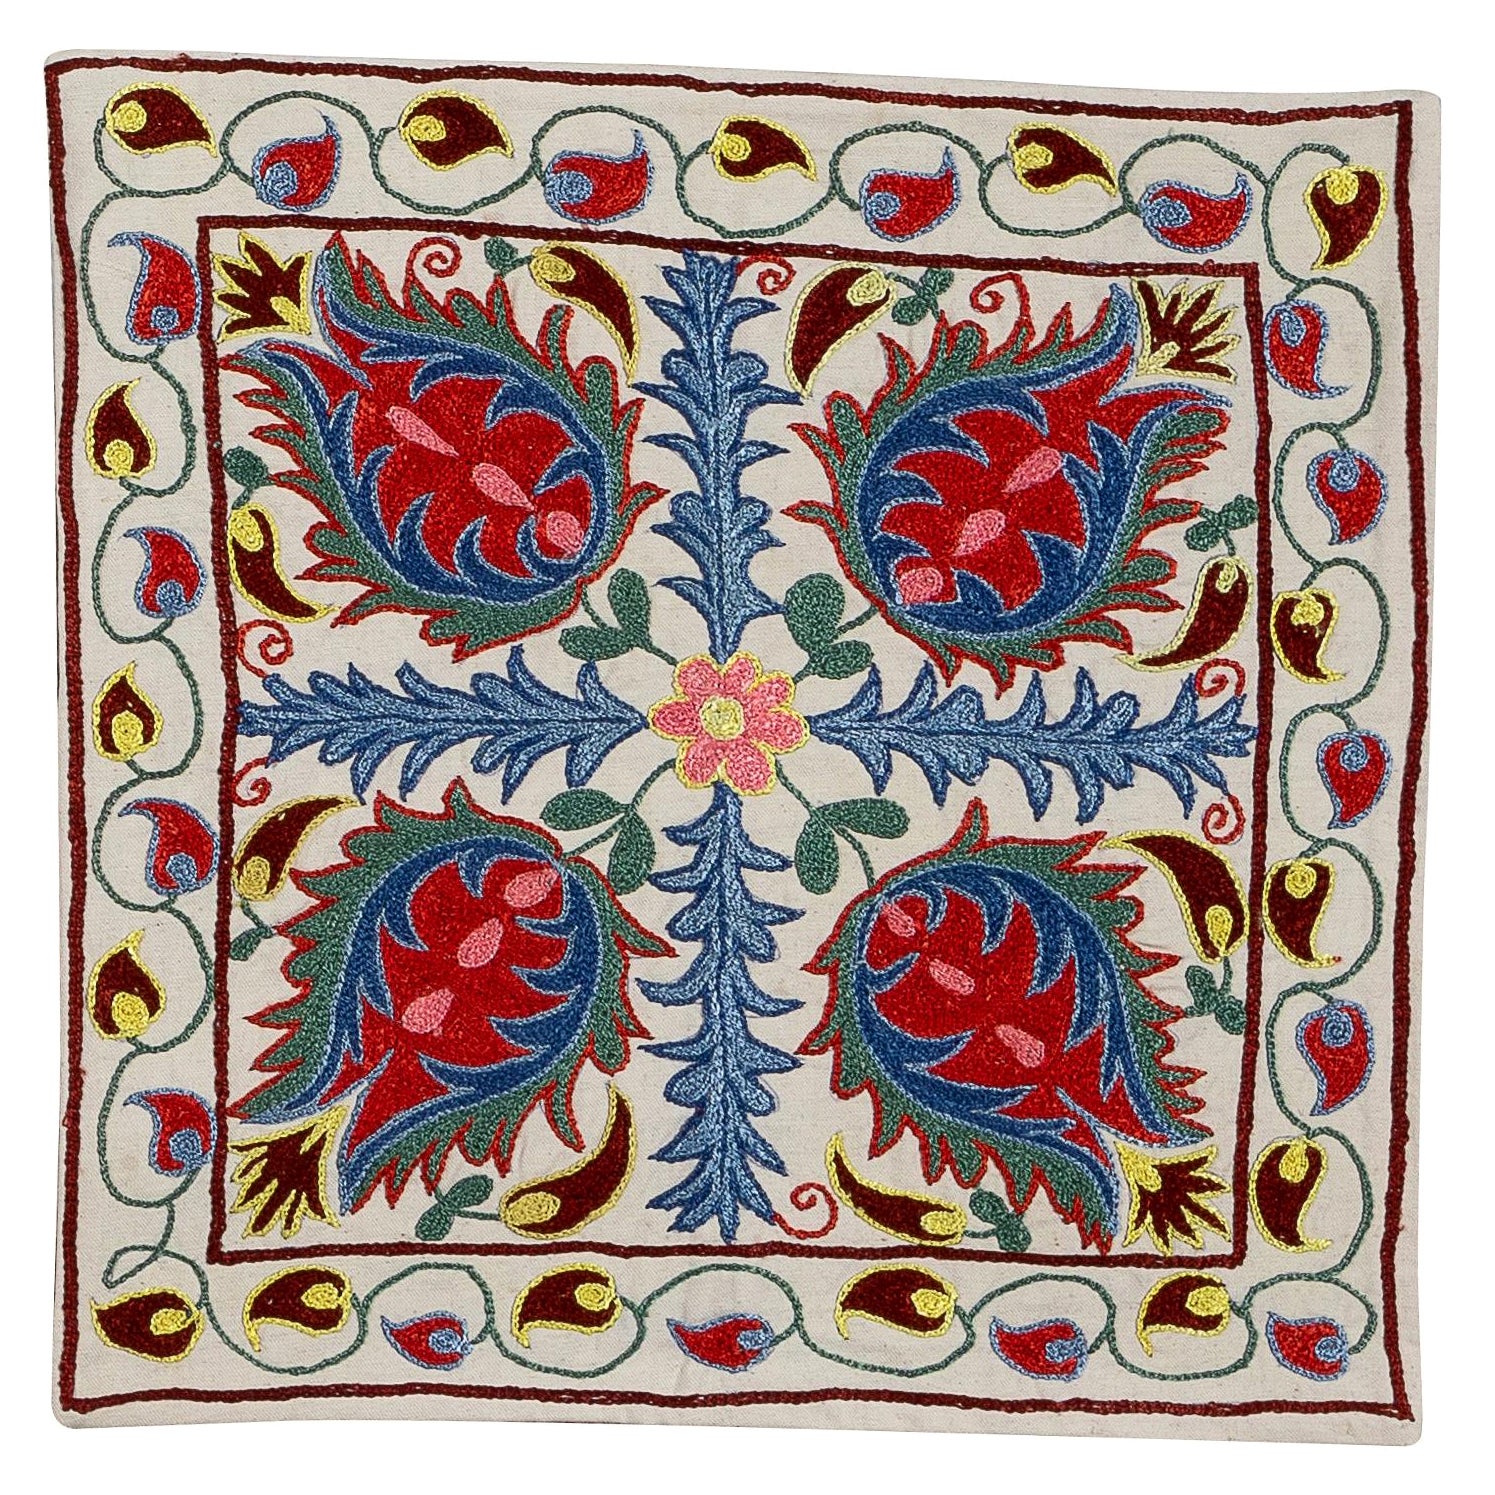 18"x18" Home Decor Throw Pillow, Uzbek Pillowcase, Embroidered Cushion Cover 